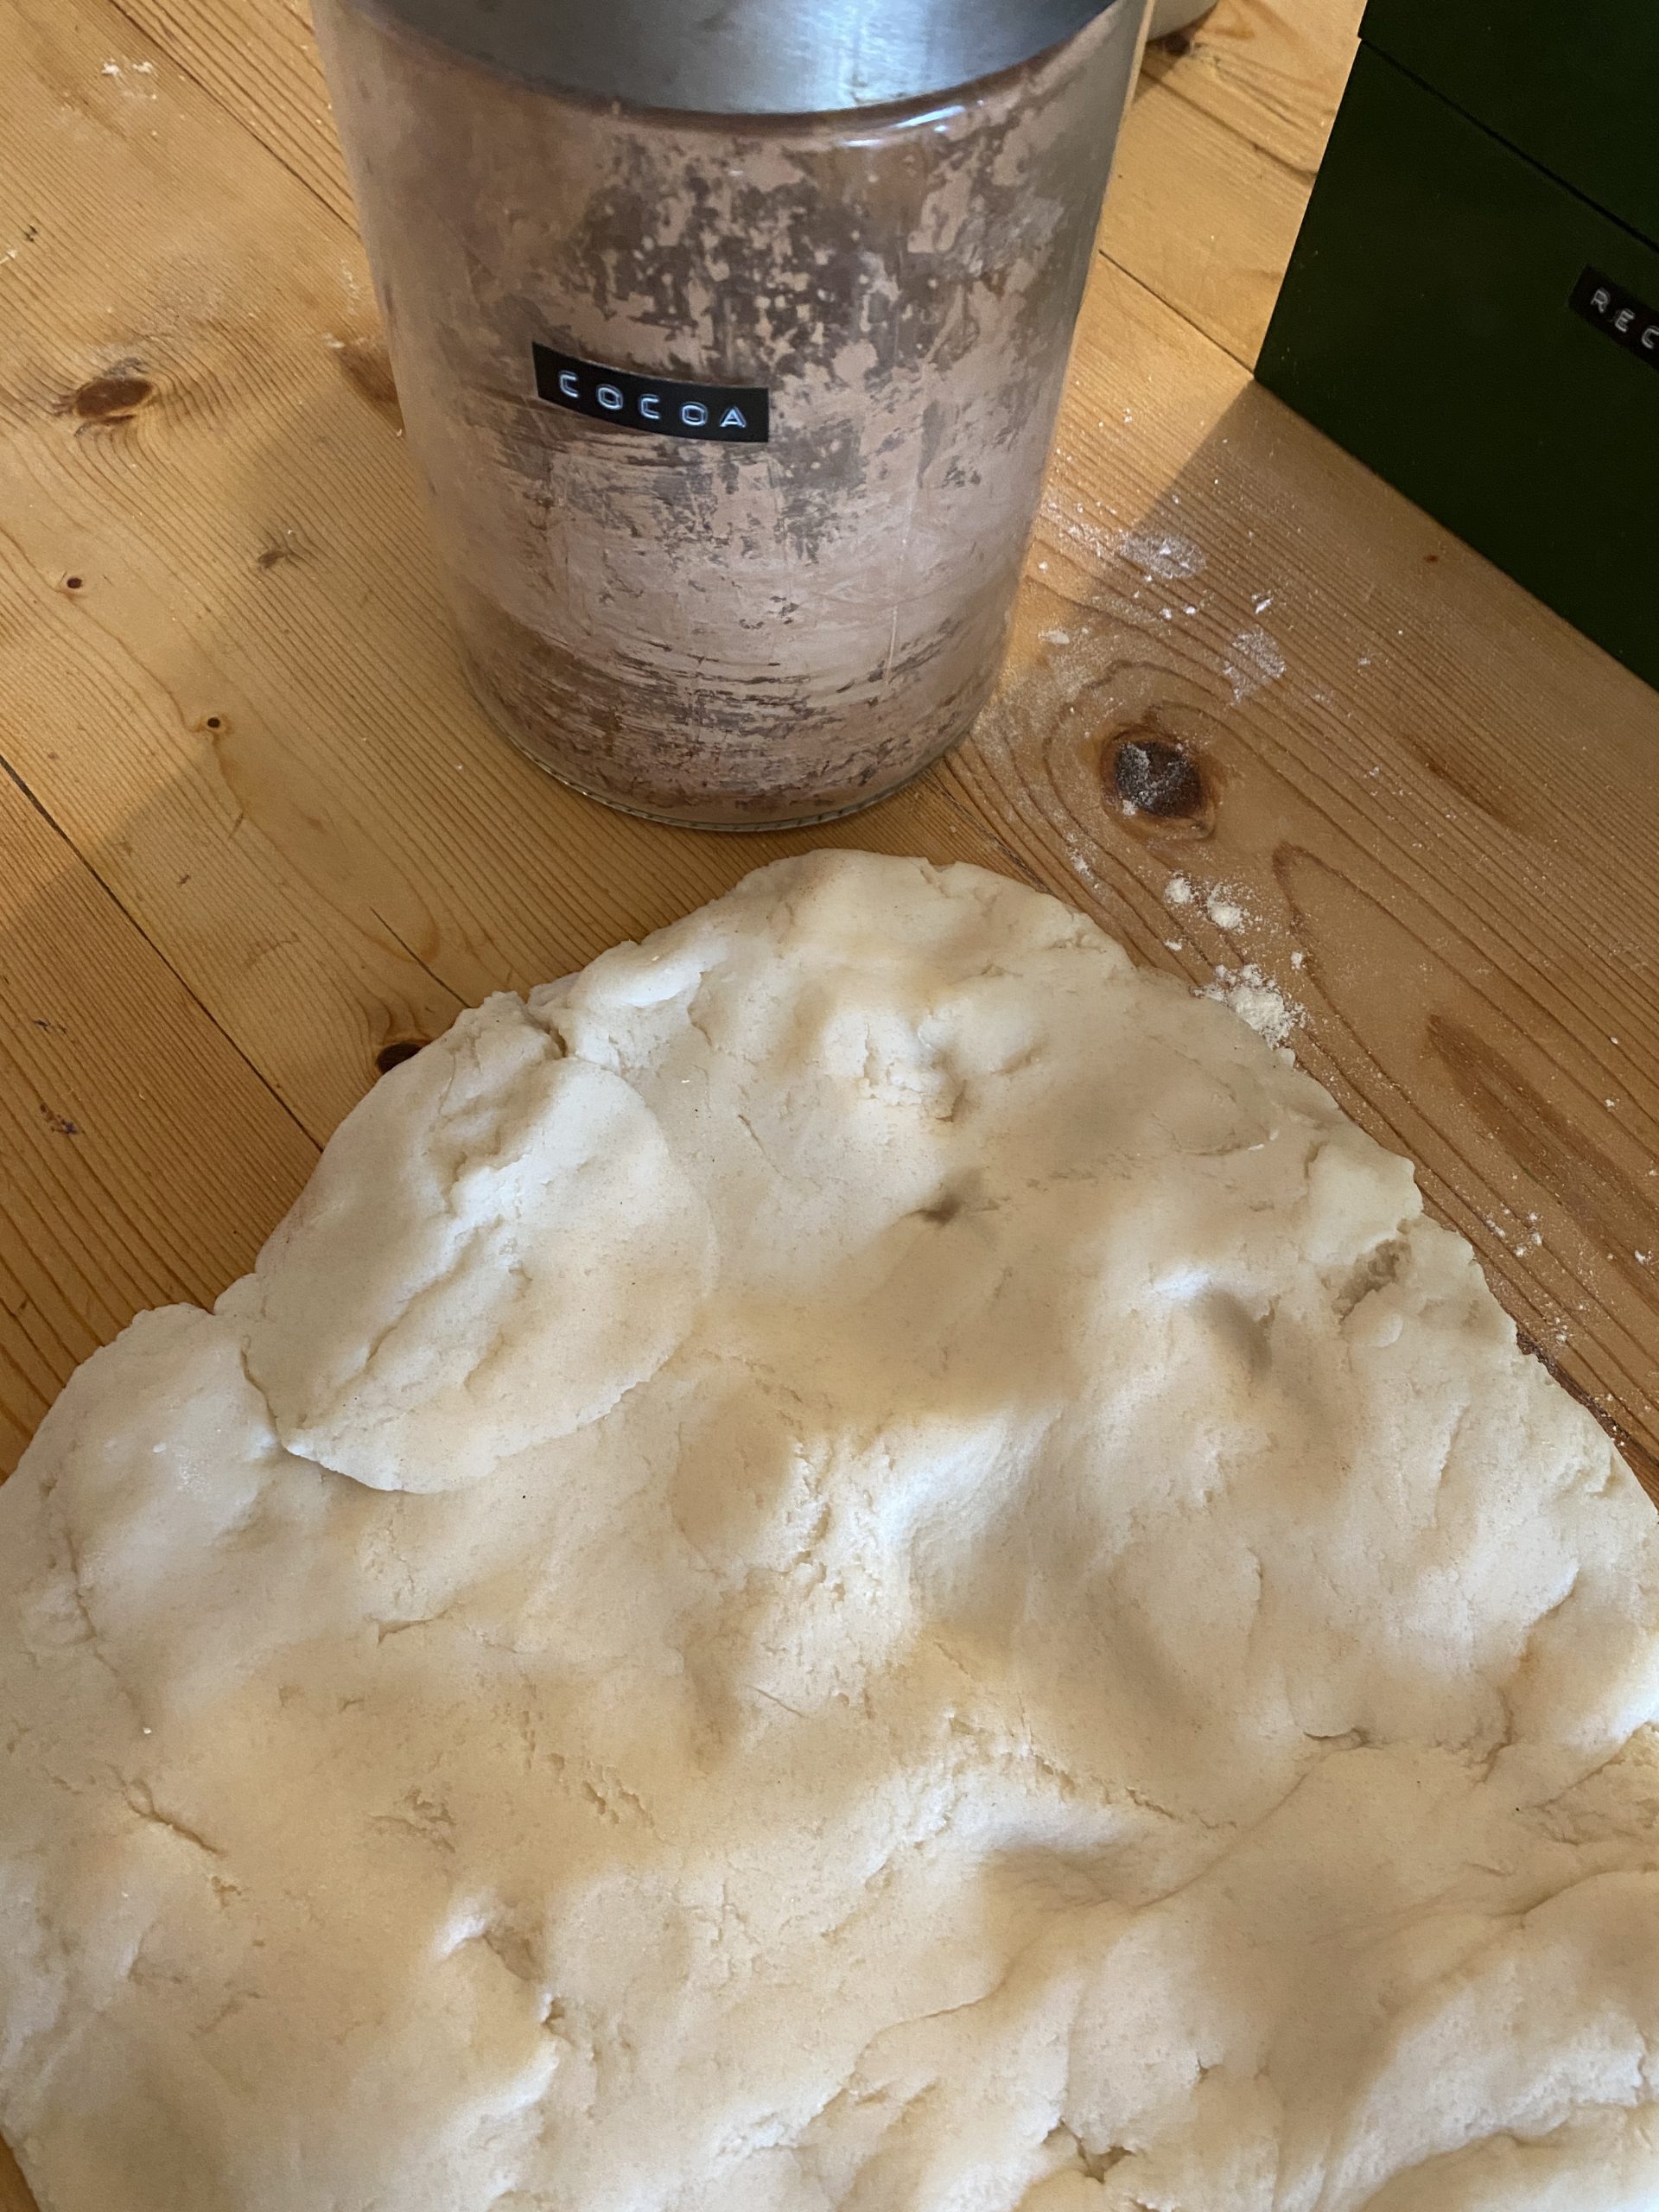 homemade play dough